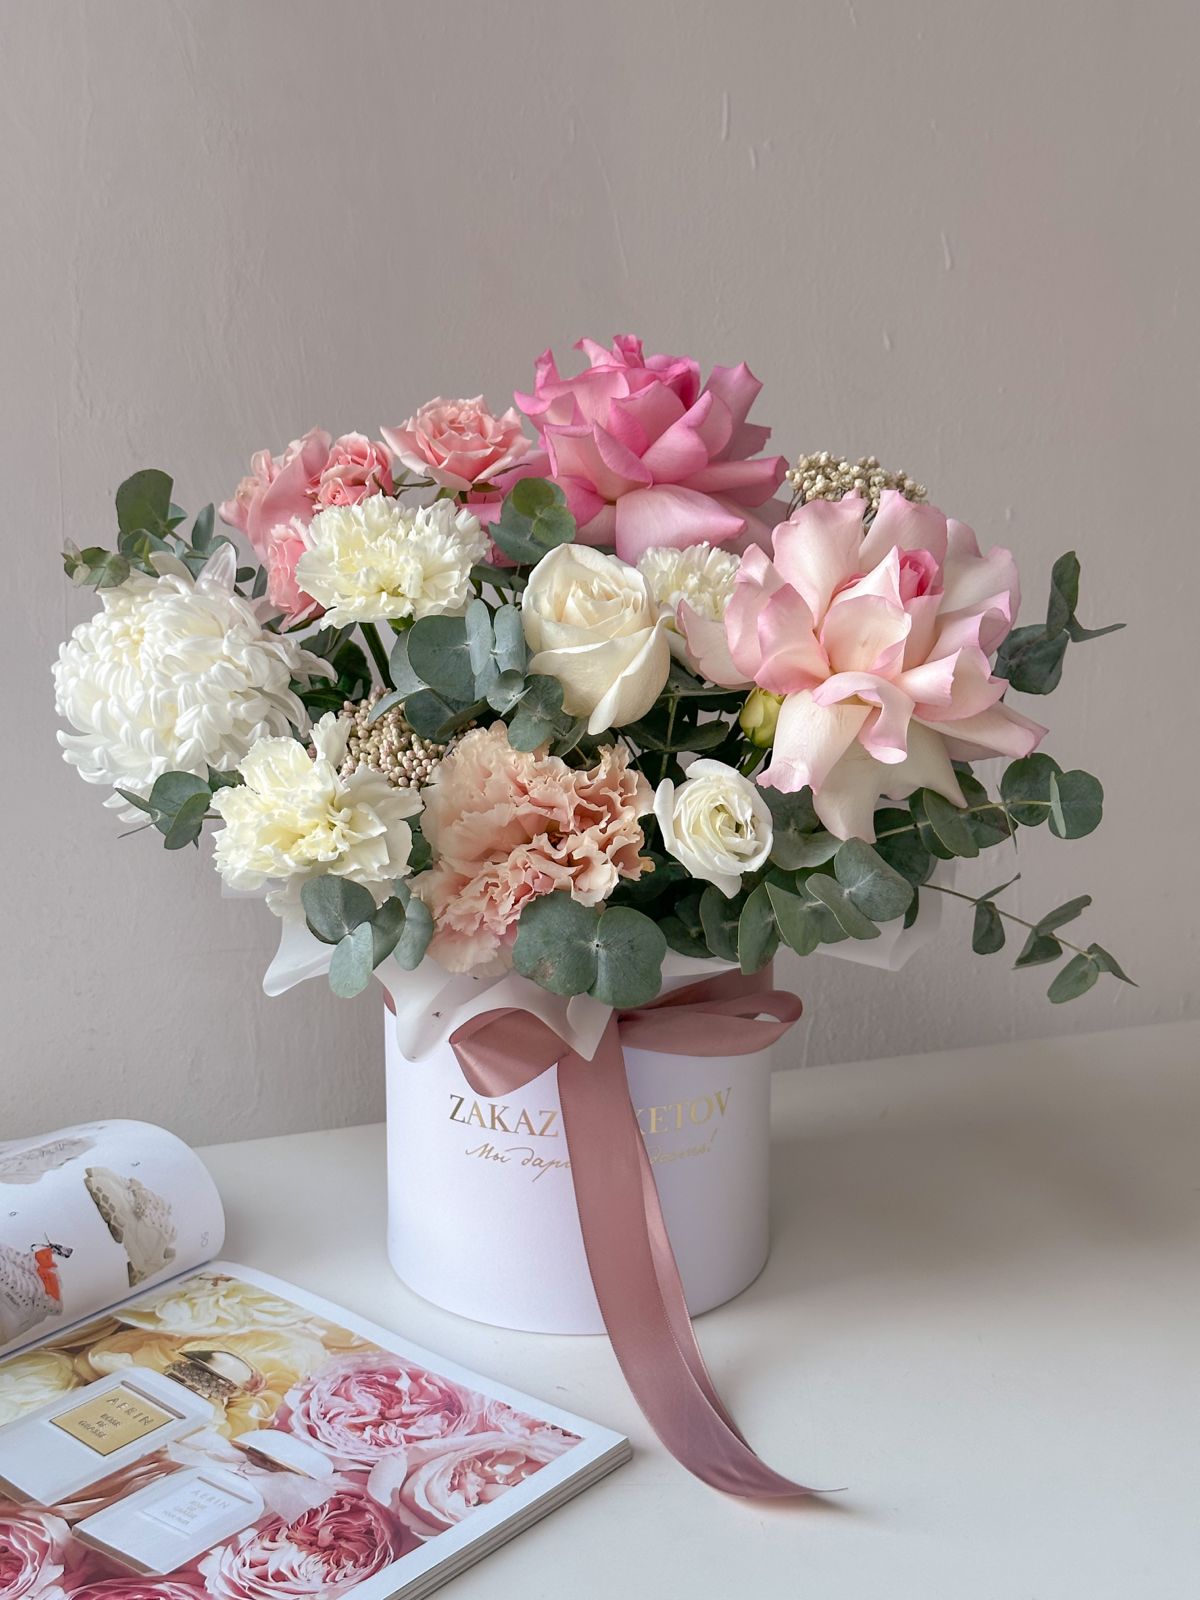 Композиция "Franko" из гвоздик, роз и хризантем